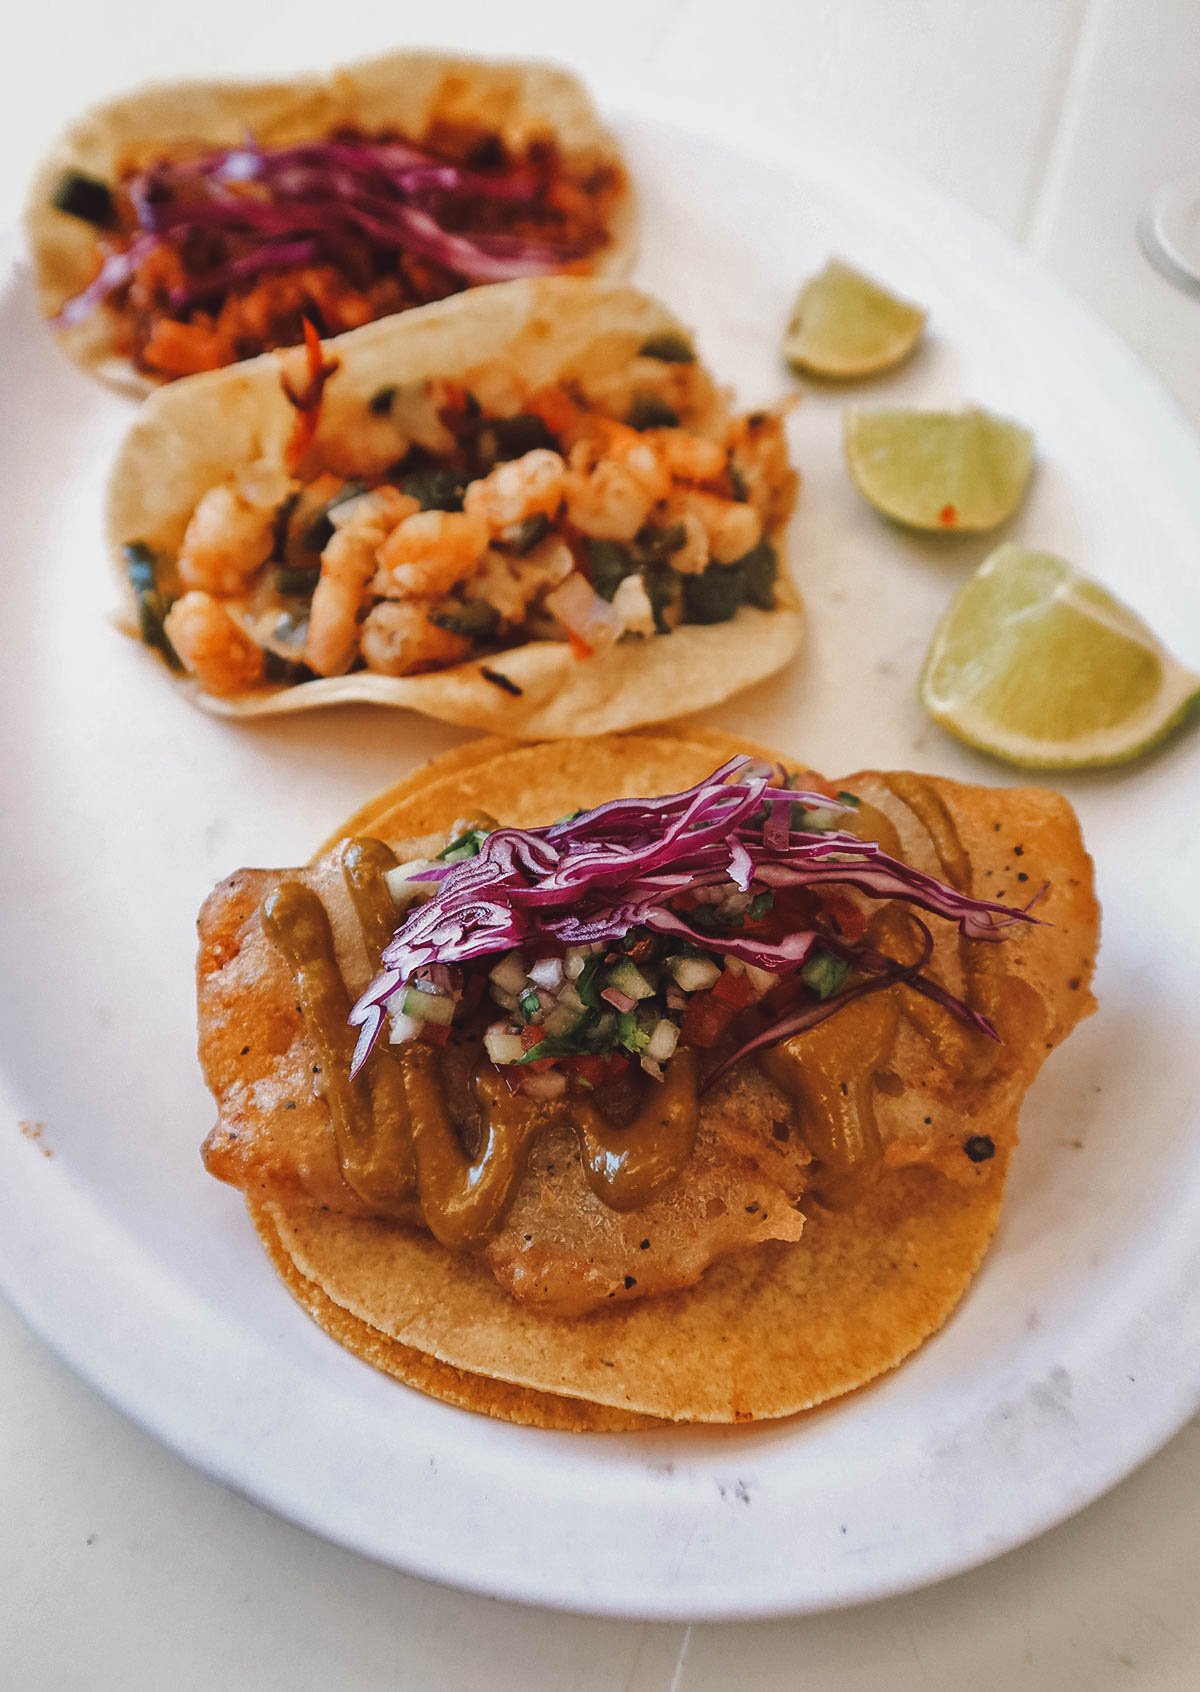 Seafood and Fish tacos at Los Culiados restaurant